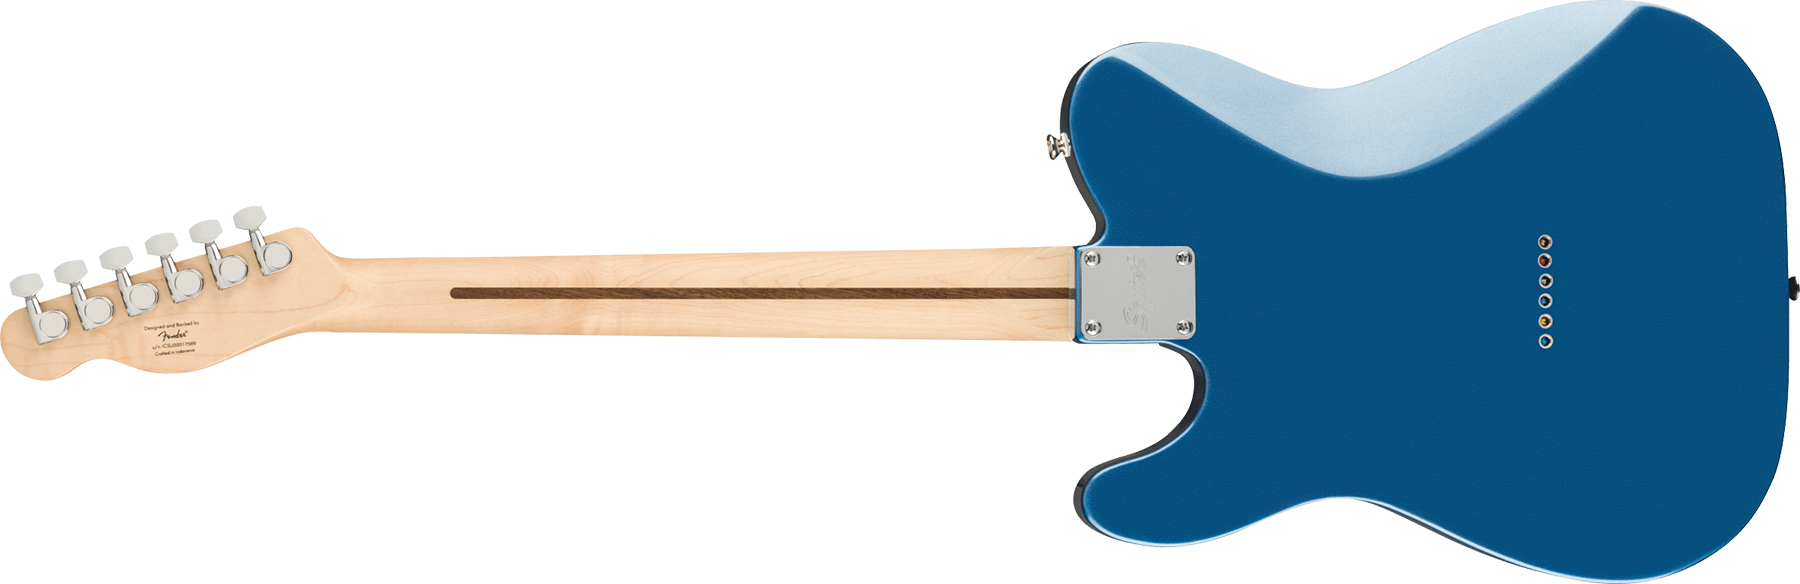 Squier Tele Affinity 2021 2s Lau - Lake Placid Blue - Semi hollow elektriche gitaar - Variation 1